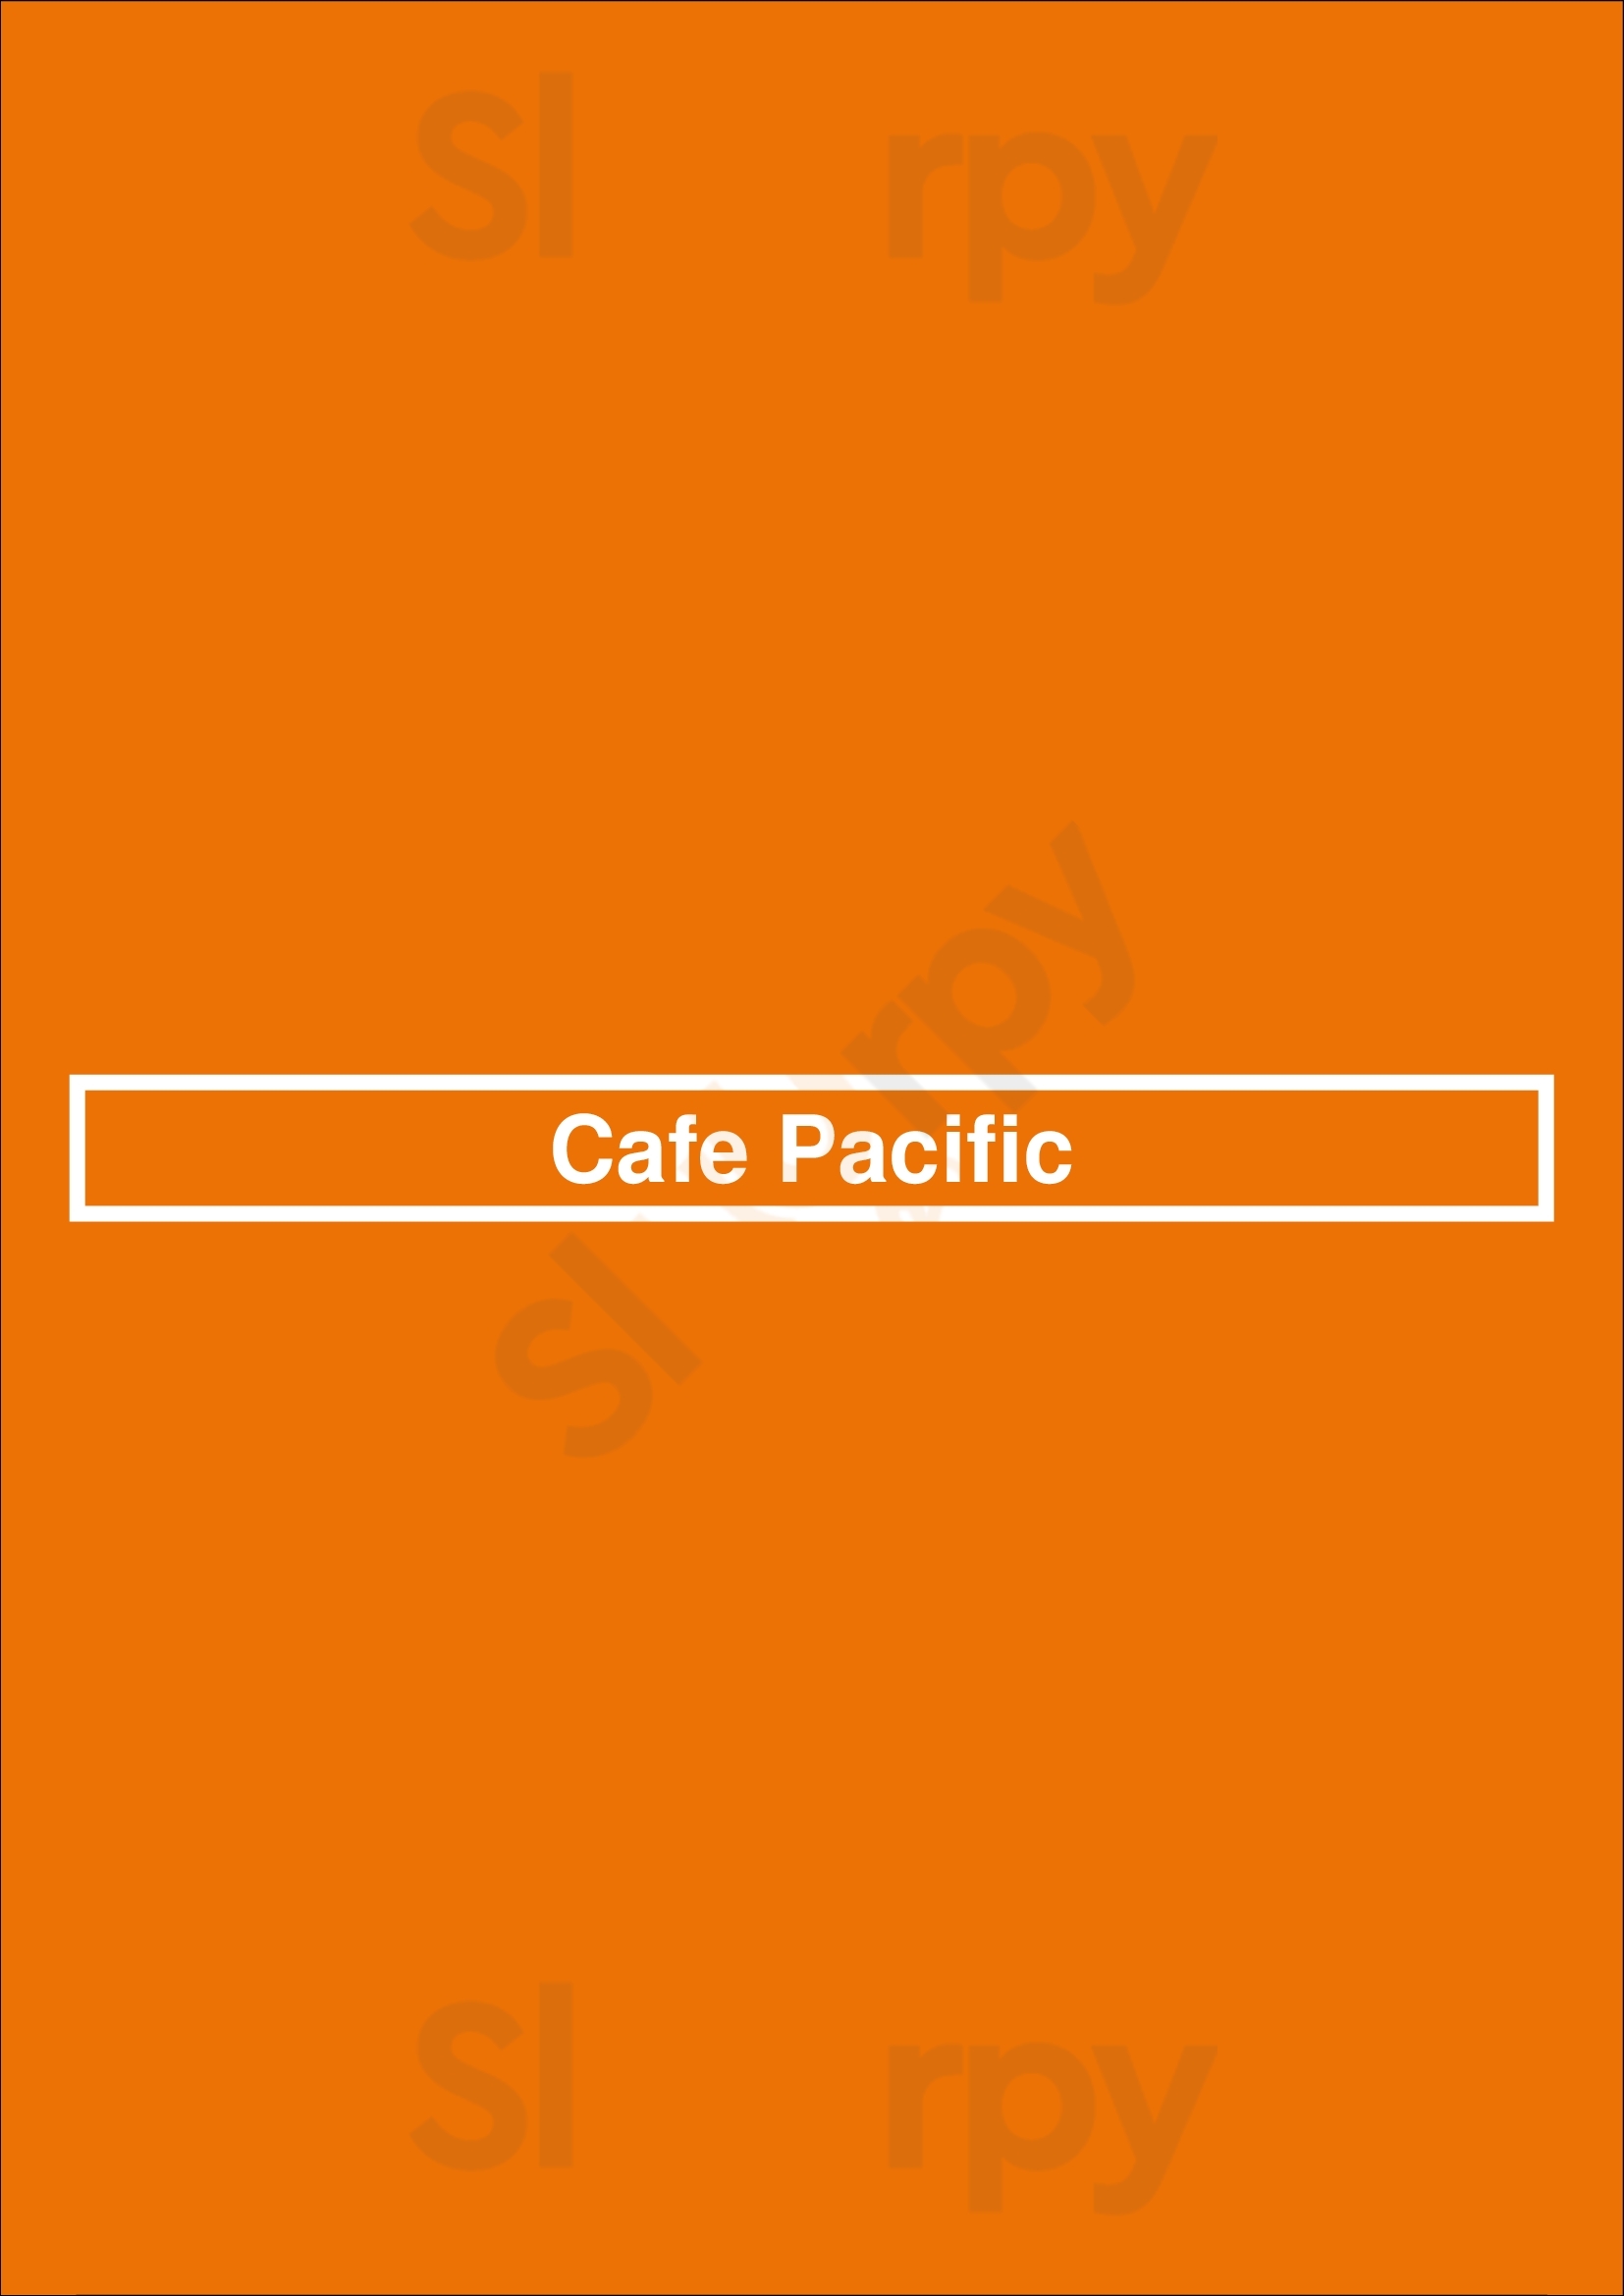 Cafe Pacific Dallas Menu - 1